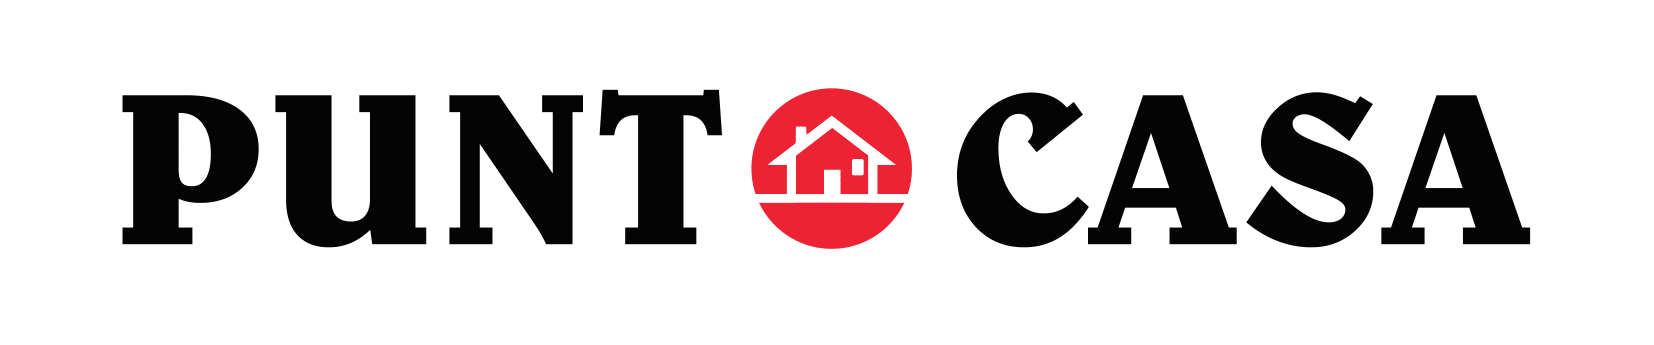 logo_punto casa evolution